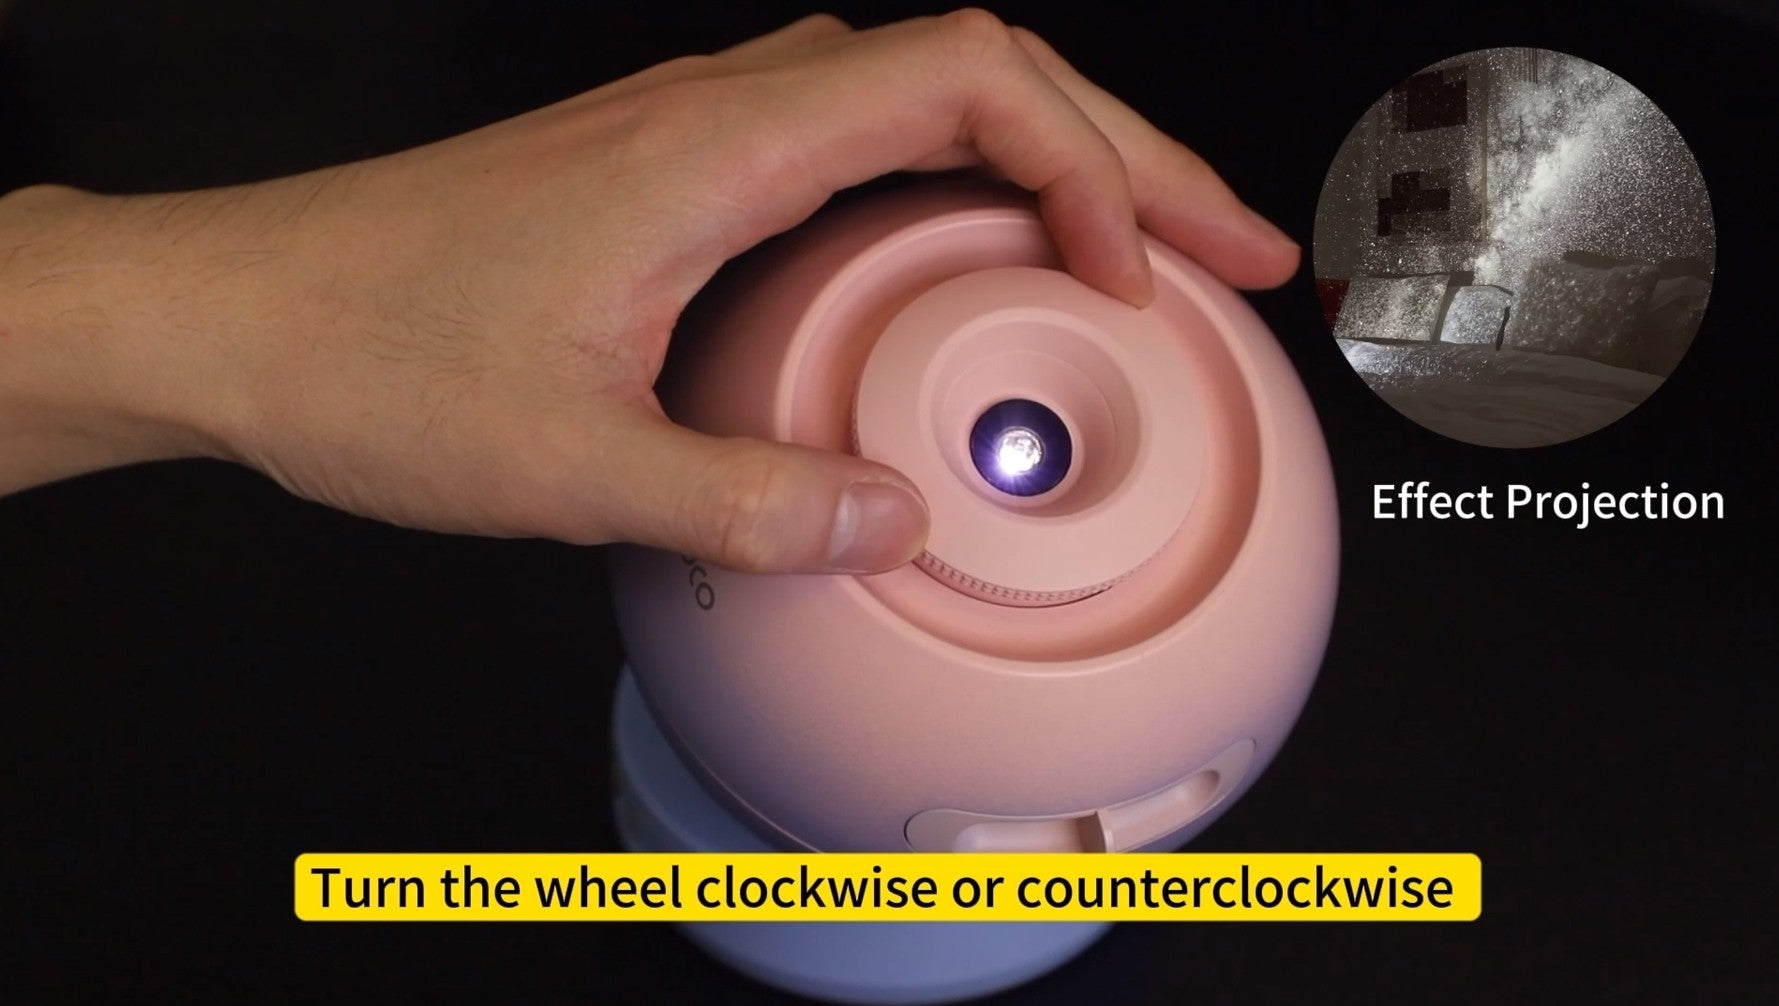 Turn the wheel clockwise or counterclockwise